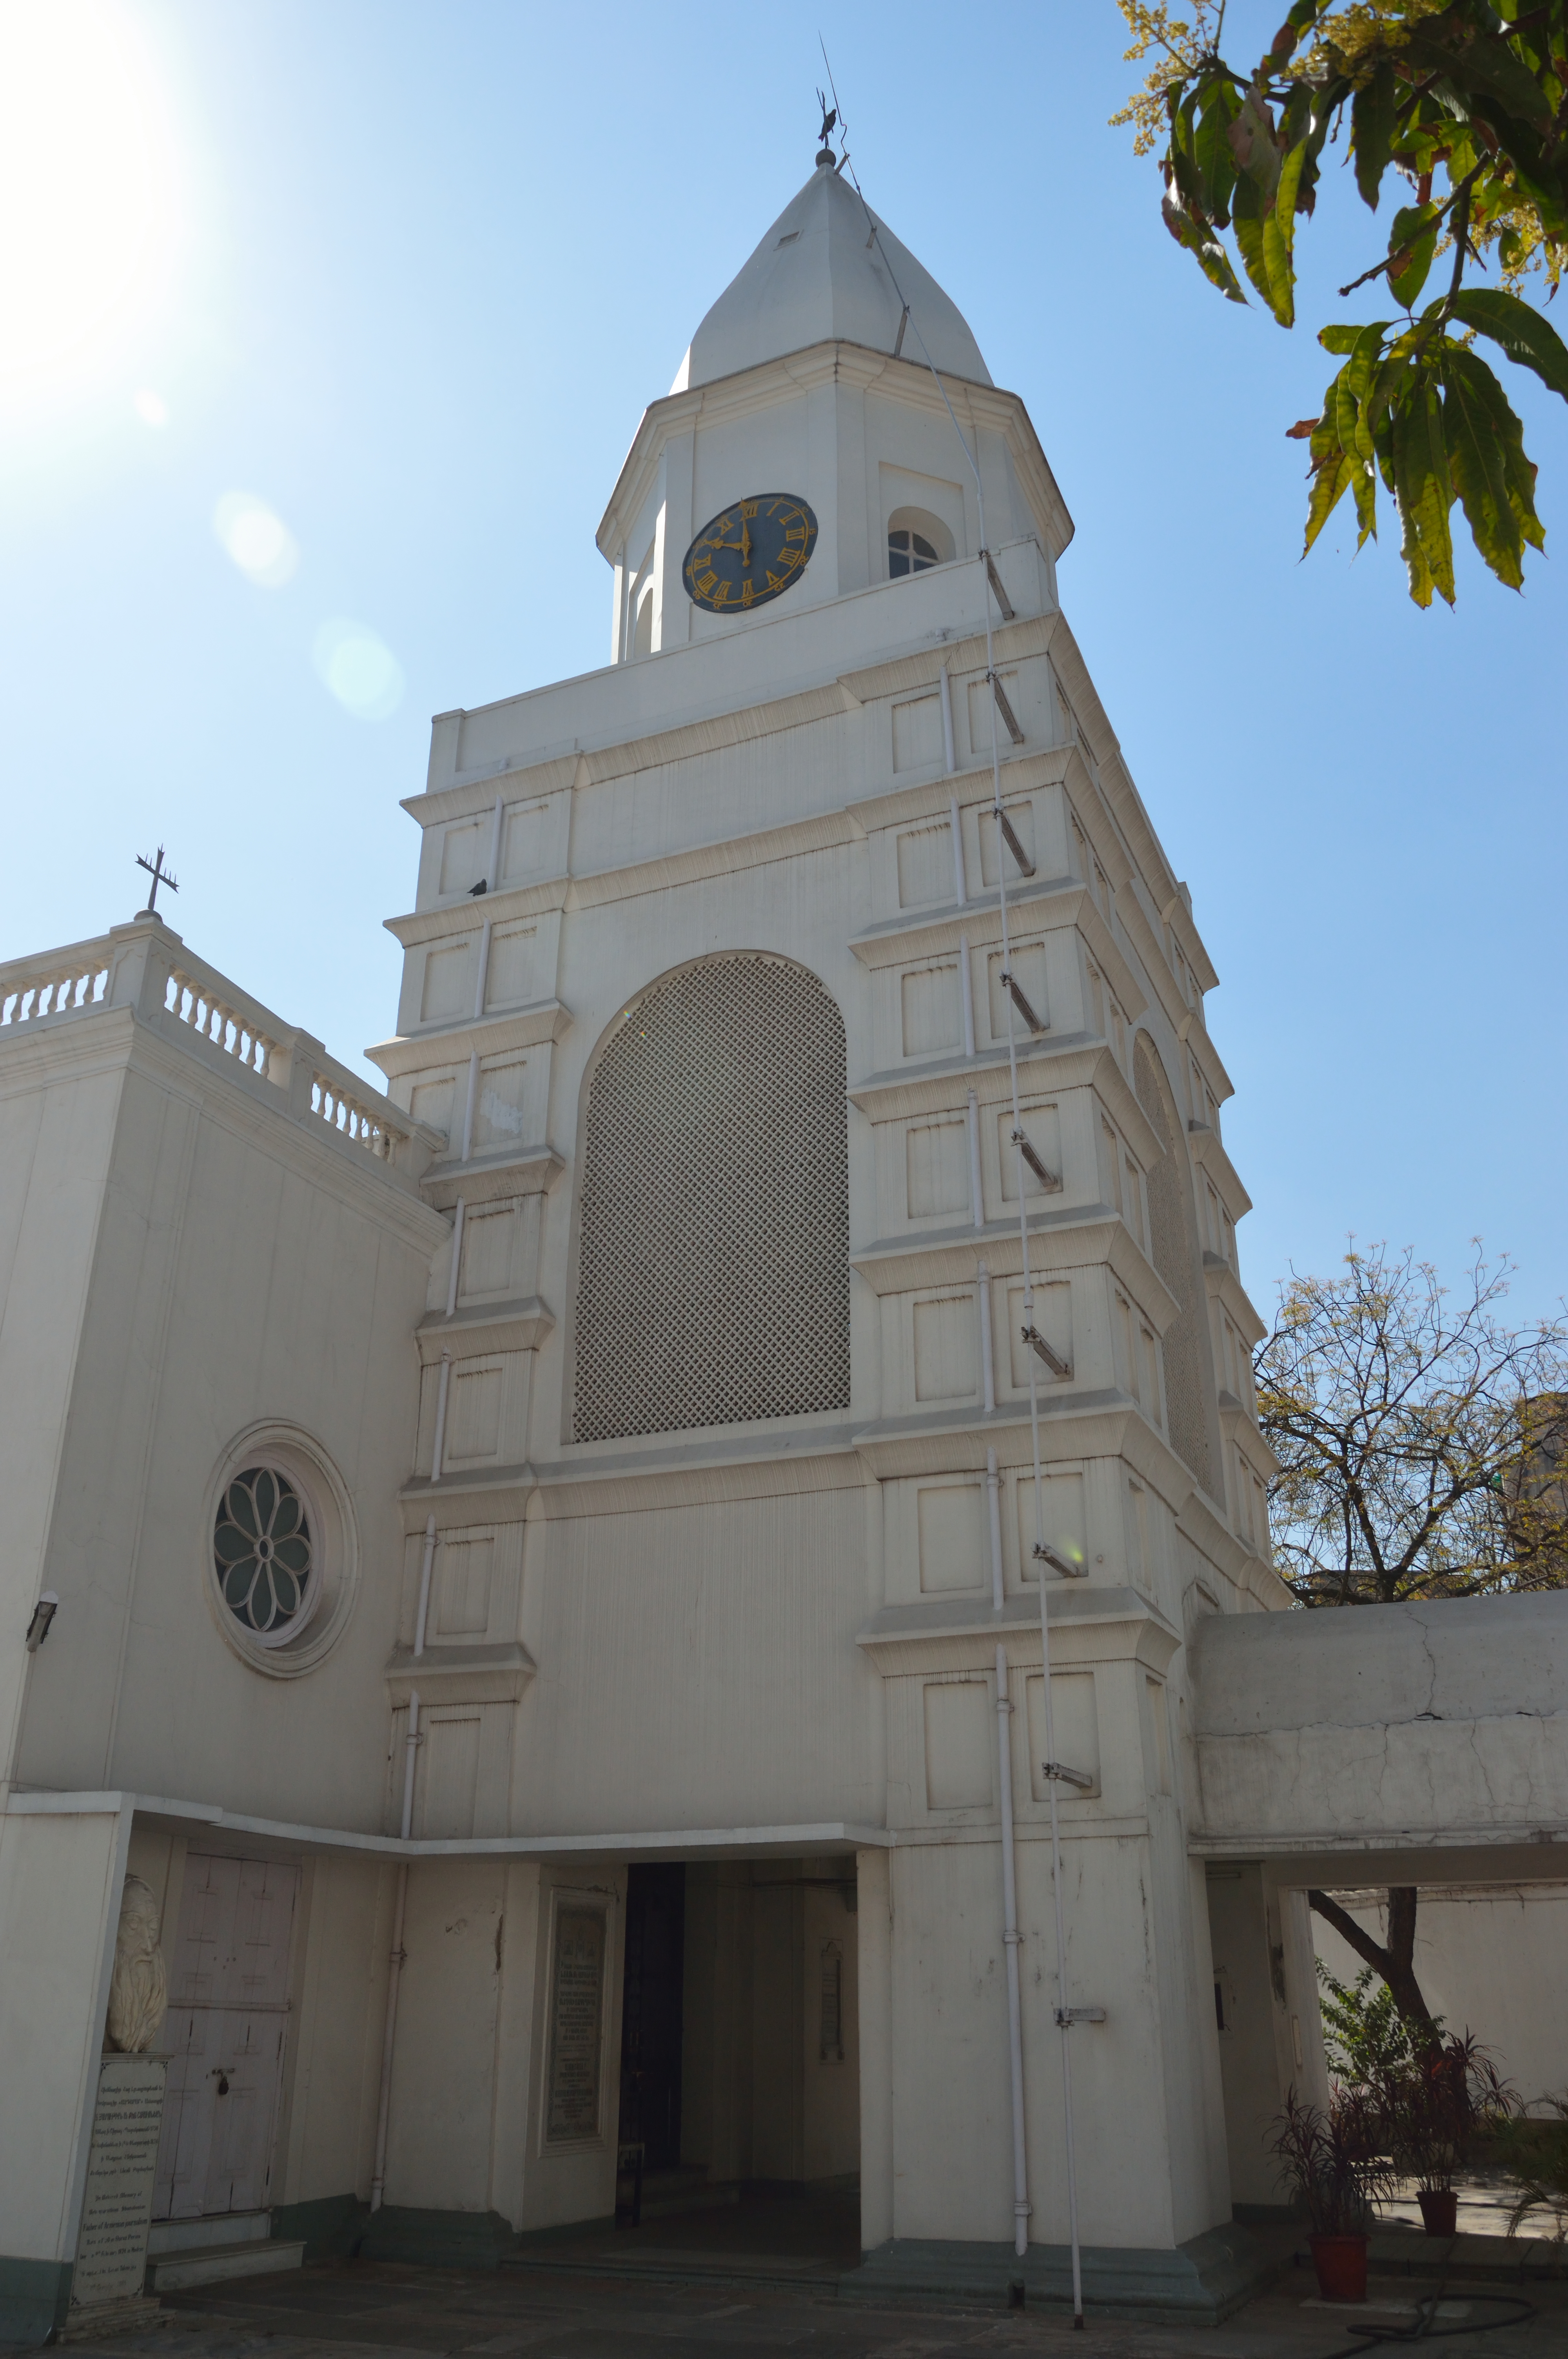 The clock tower at the Armenian Holy Church of Nazareth, Calcutta (Kolkata), early 18th century